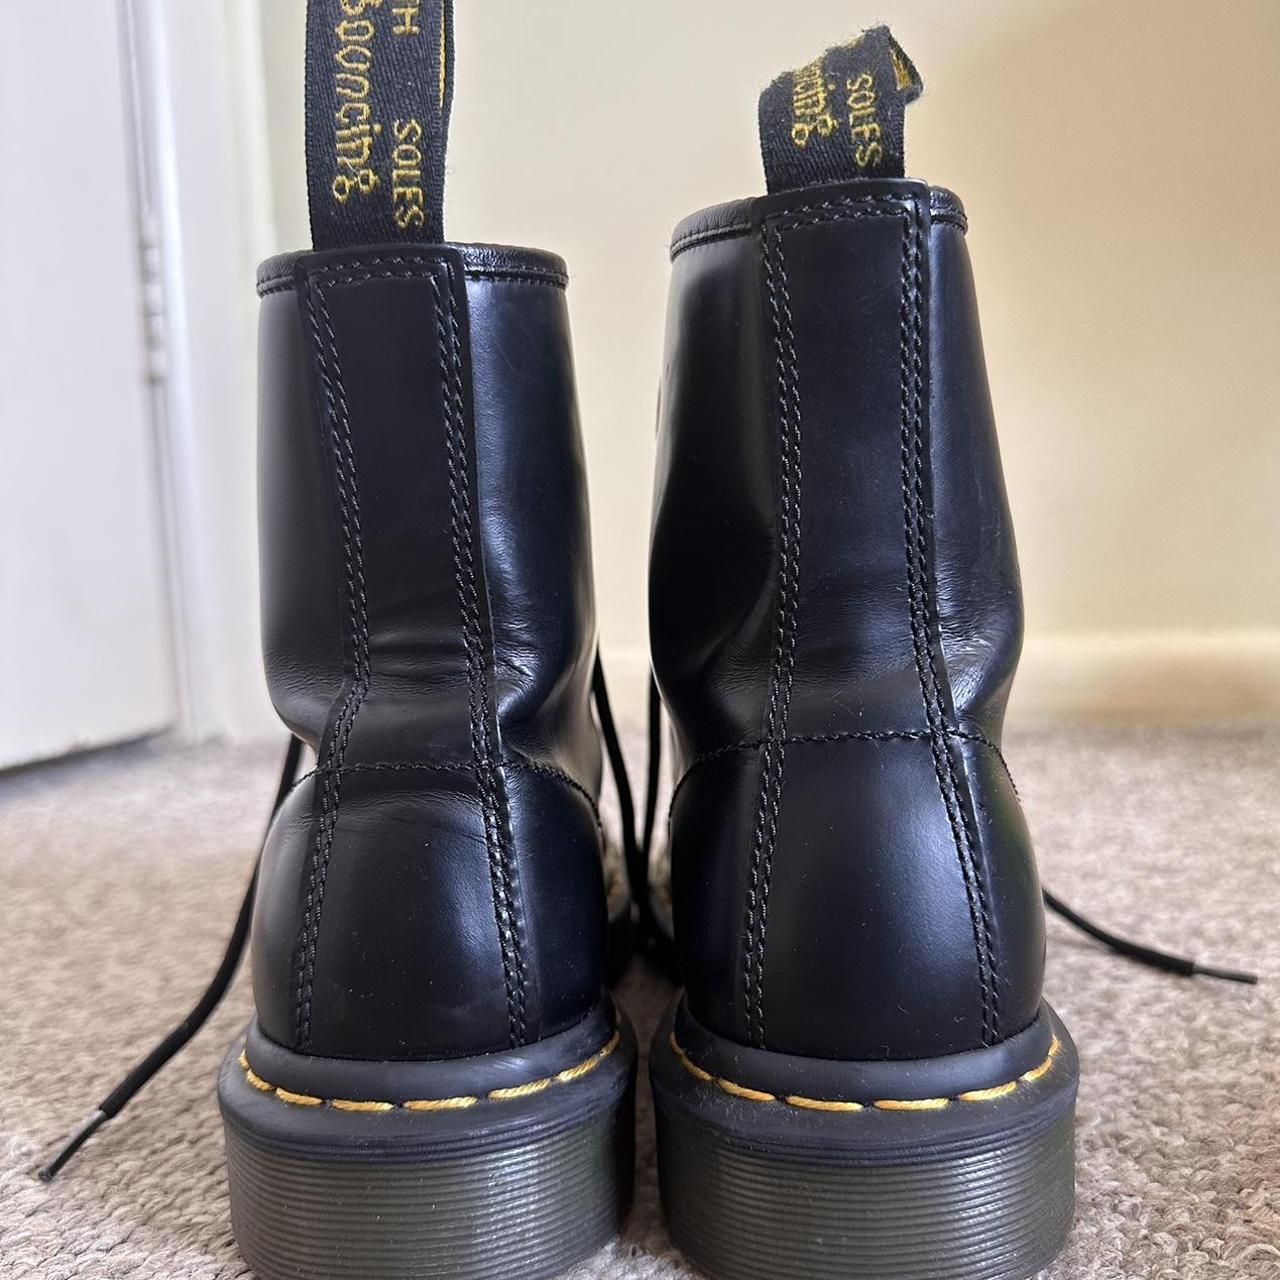 Doc Martin 1460 Boots - Size UK6/US7 (box... - Depop